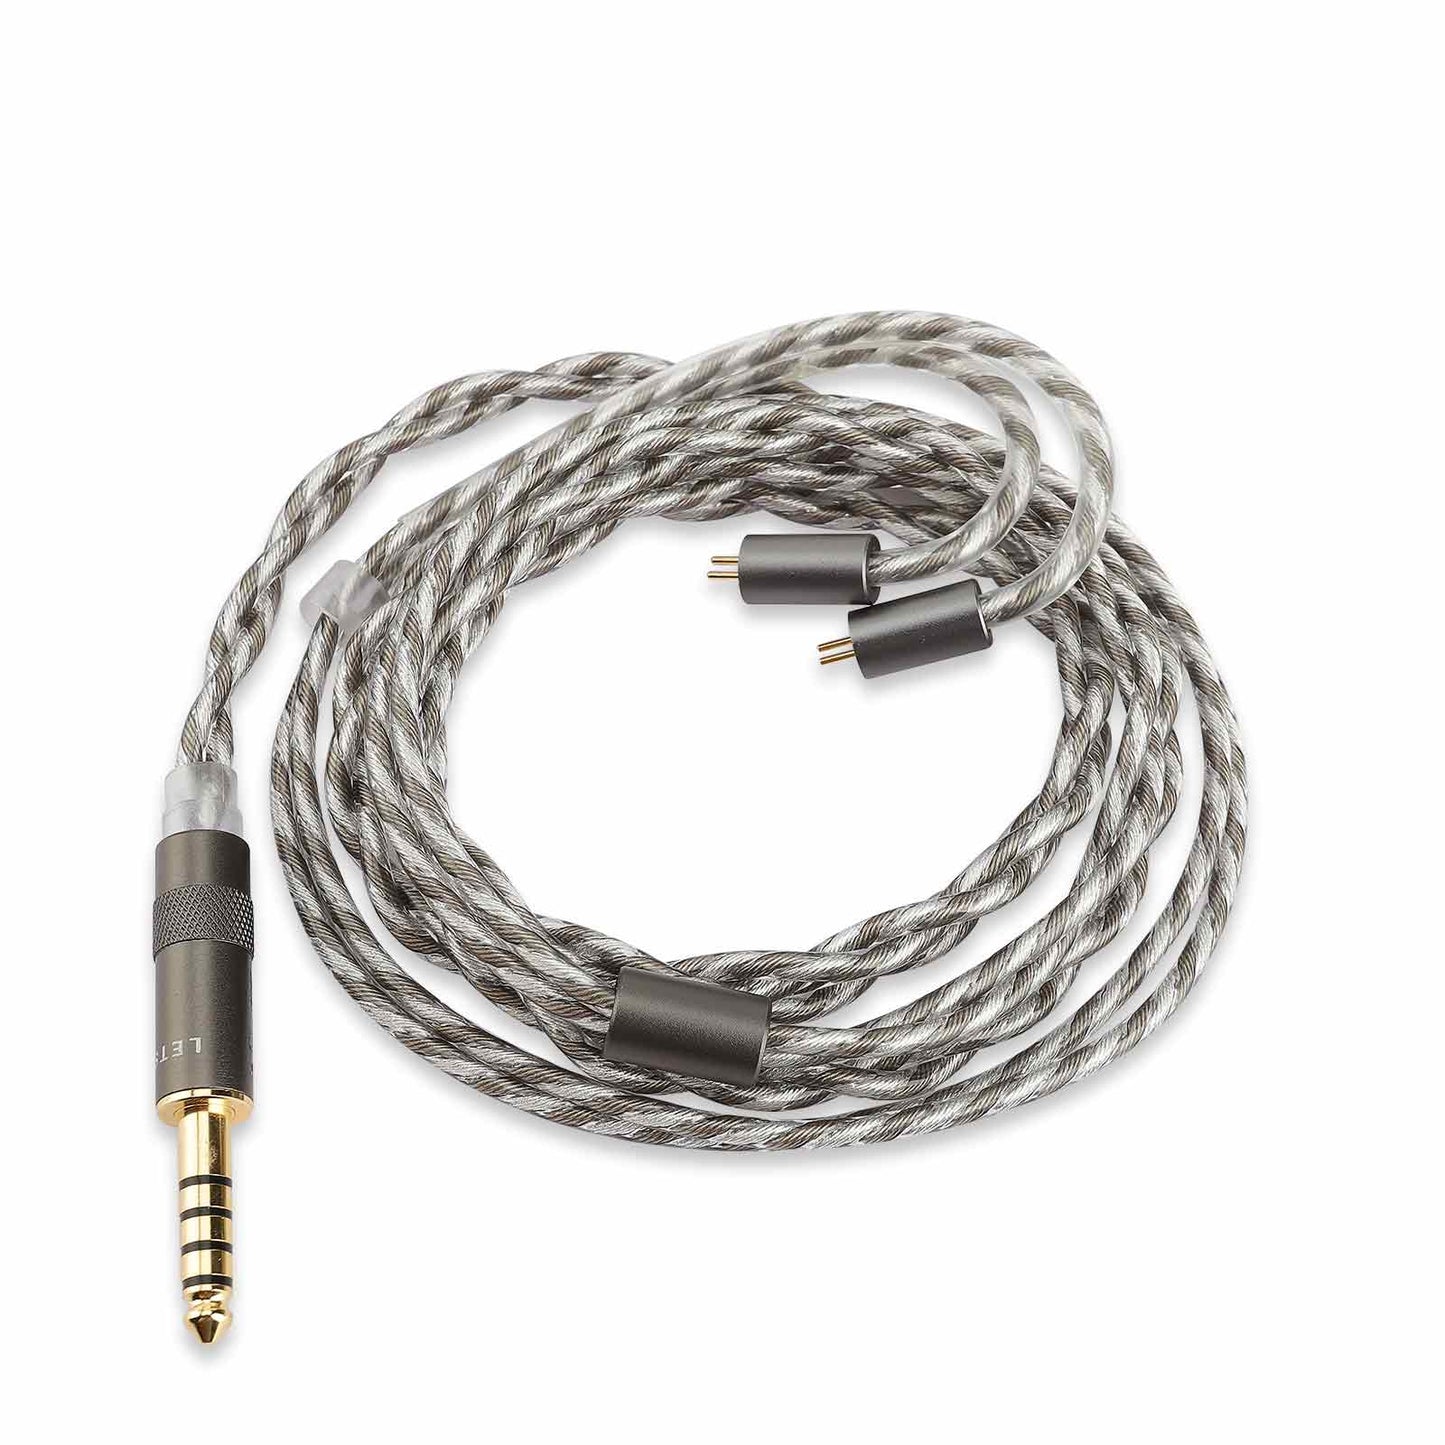 LETSHUOER M5 audio 3.5mm/4.4mm balanced headphone cables - The HiFi Cat